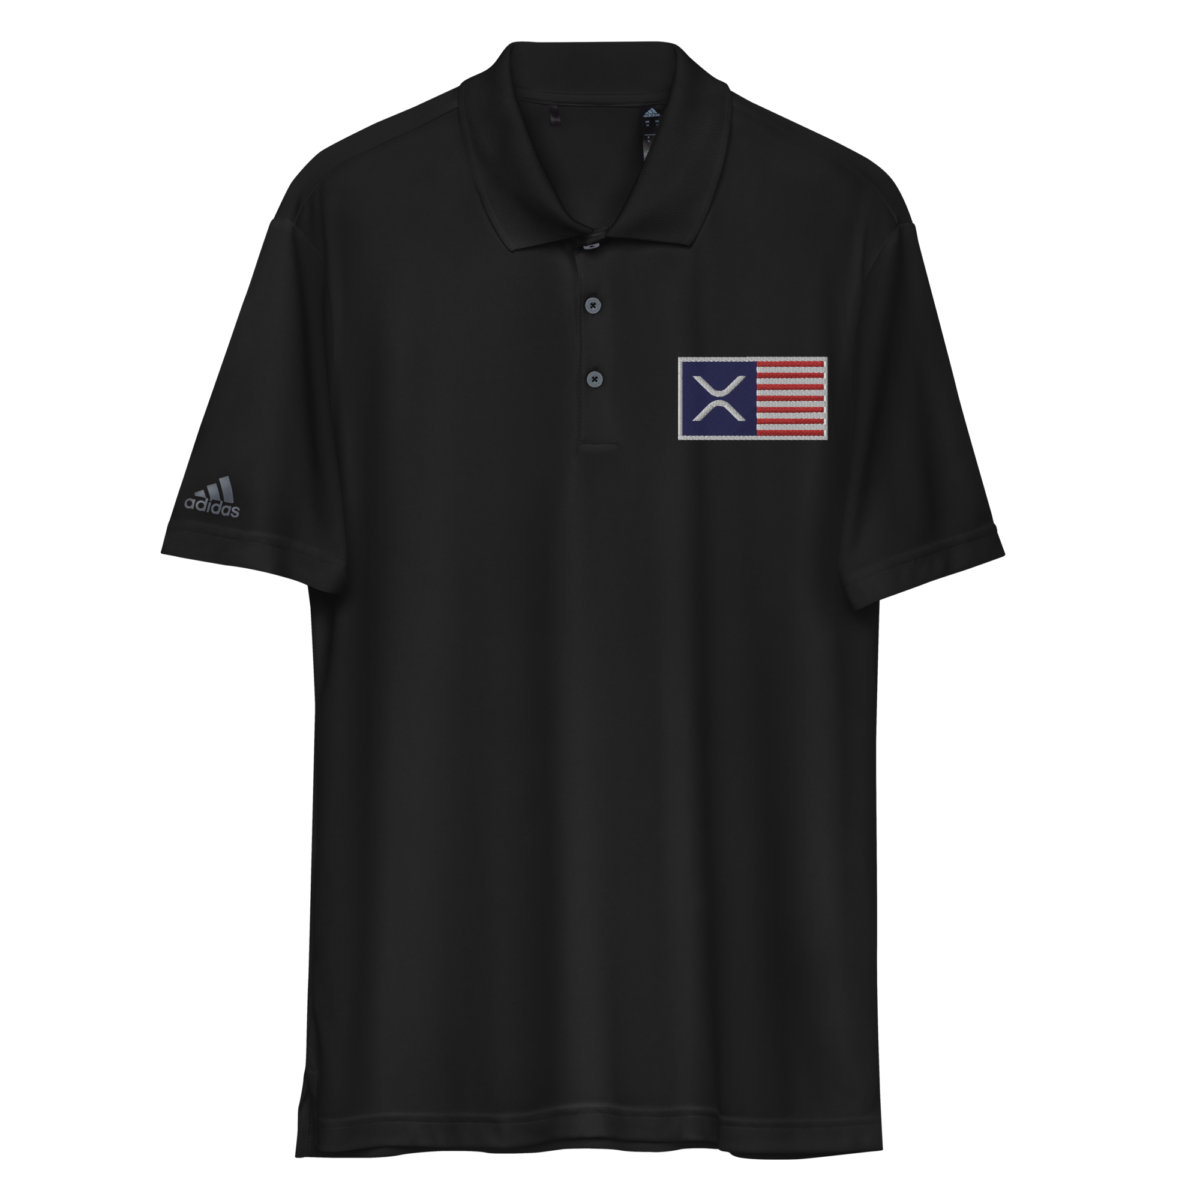 adidas performance polo shirt black front 634ad33eab5bb - XRP USA Flag Adidas Performance Polo Shirt